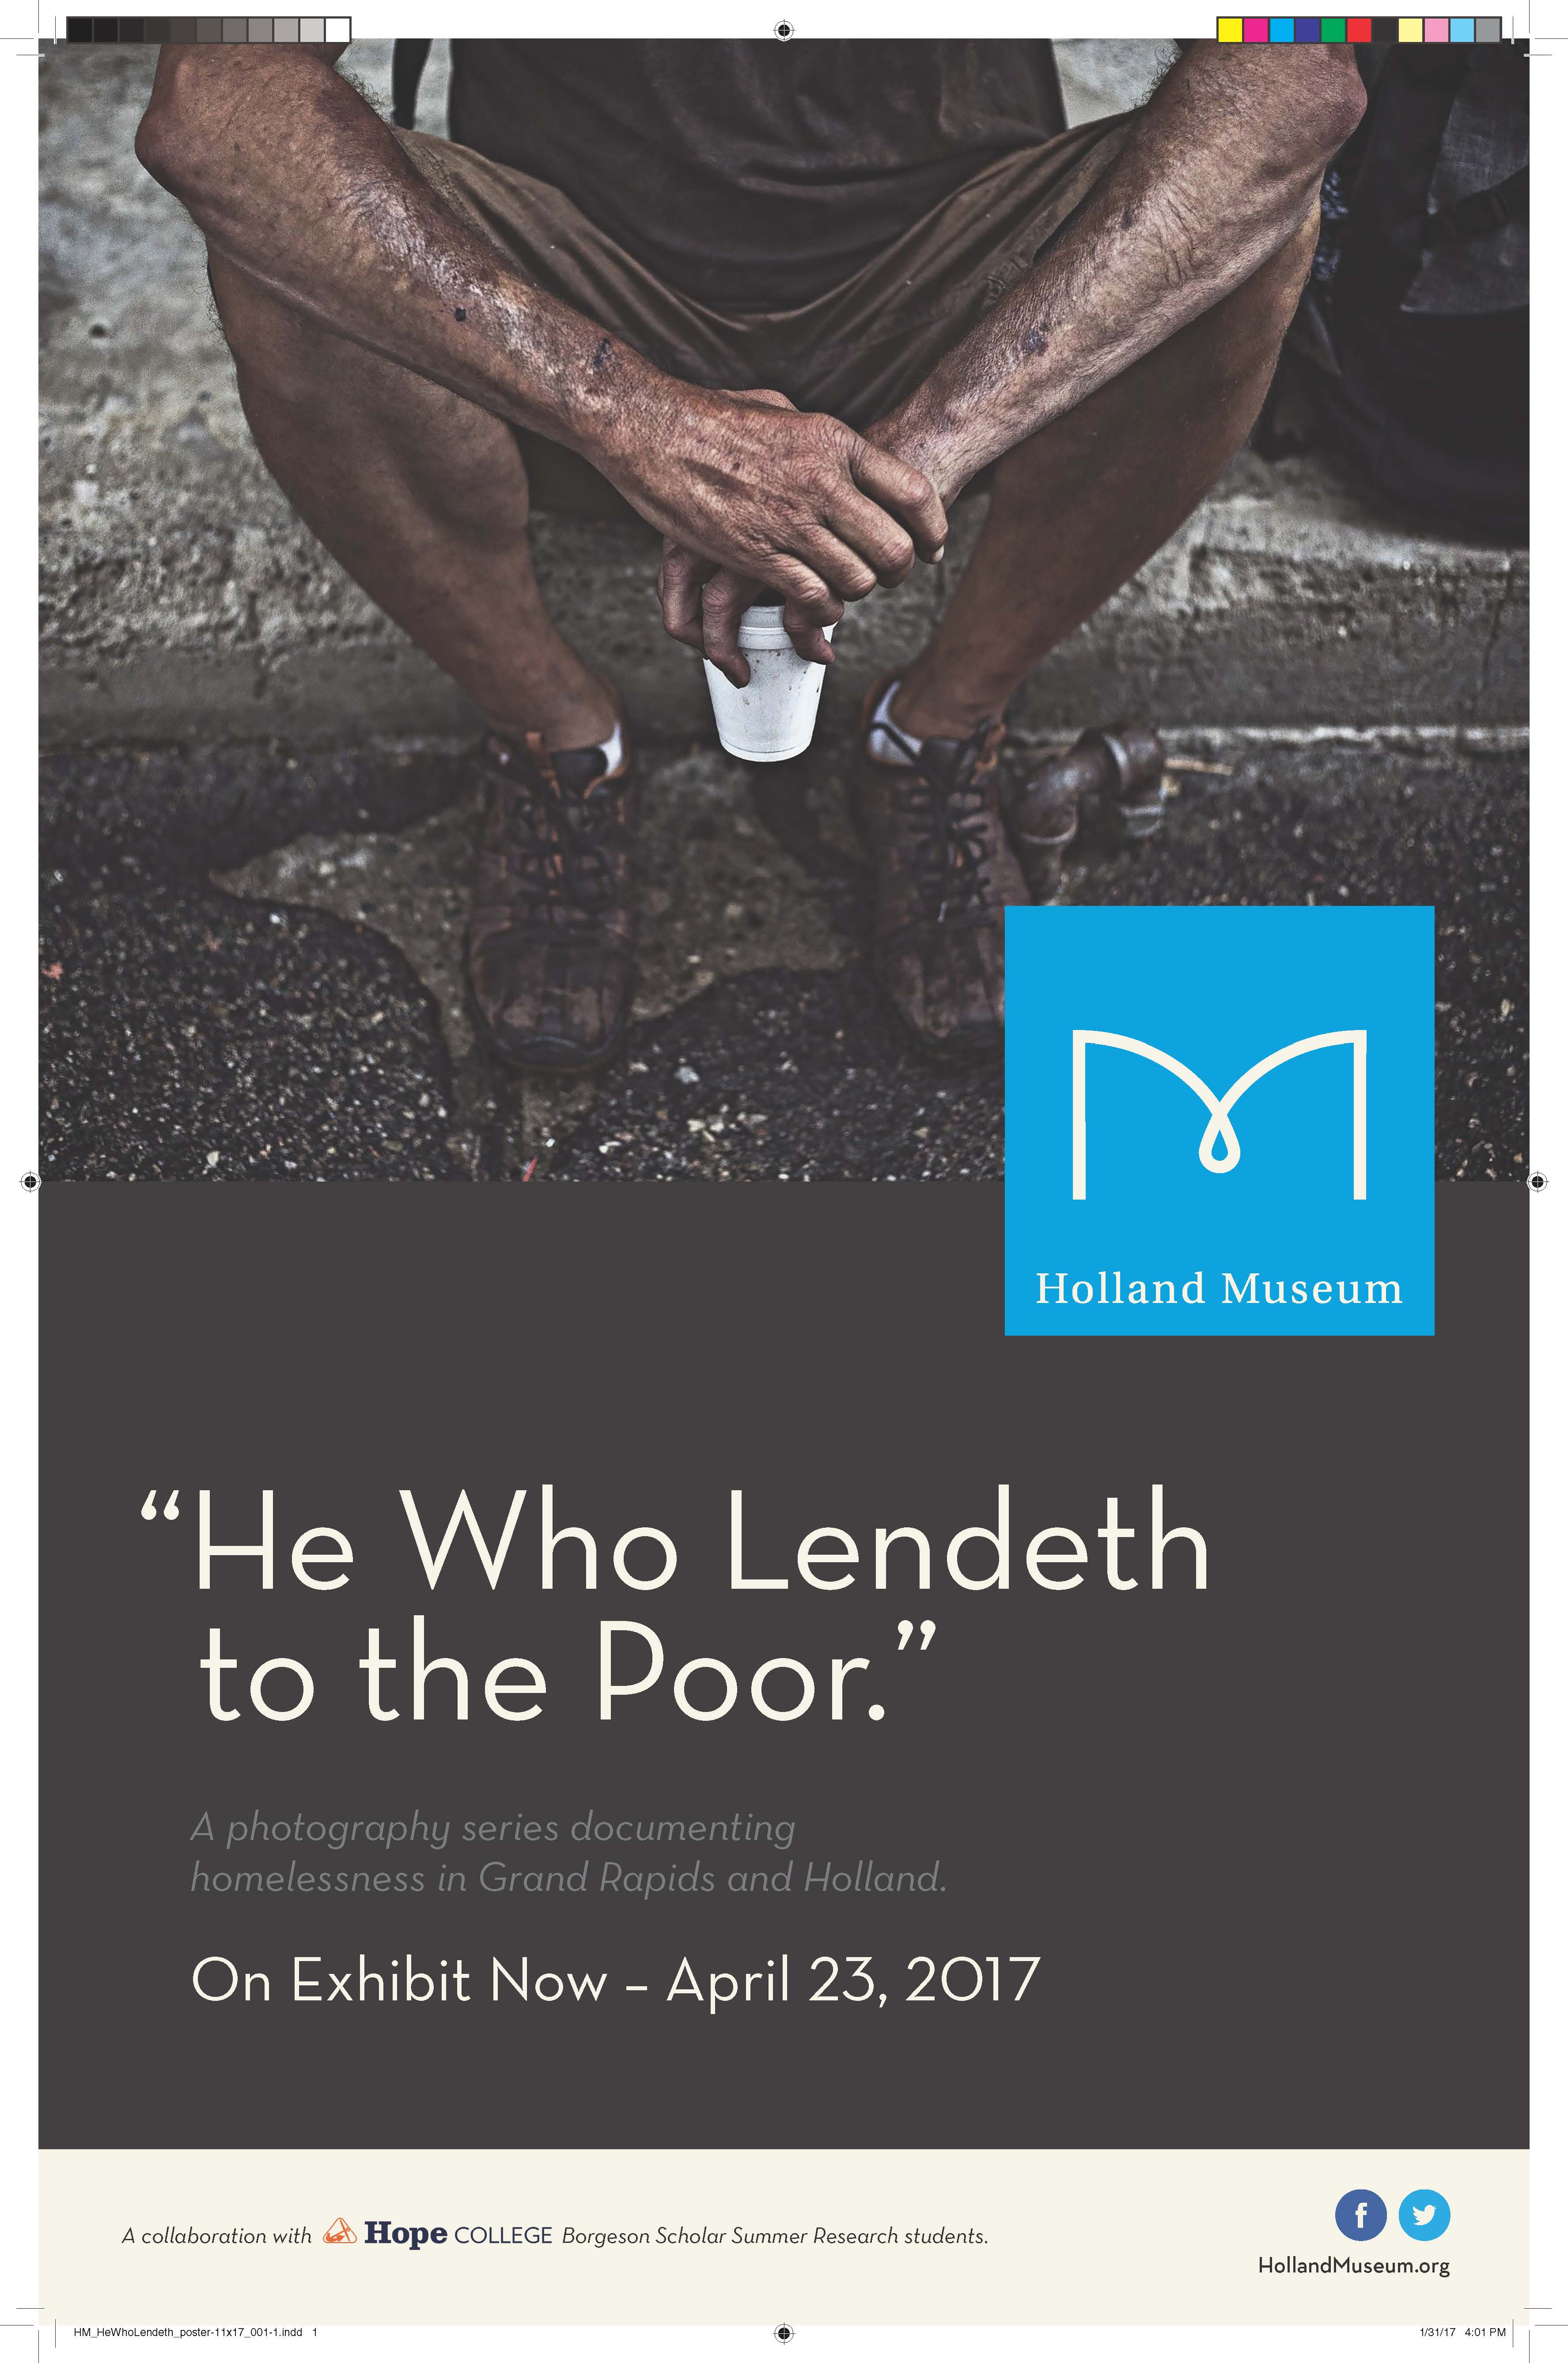 He who lendeth poster